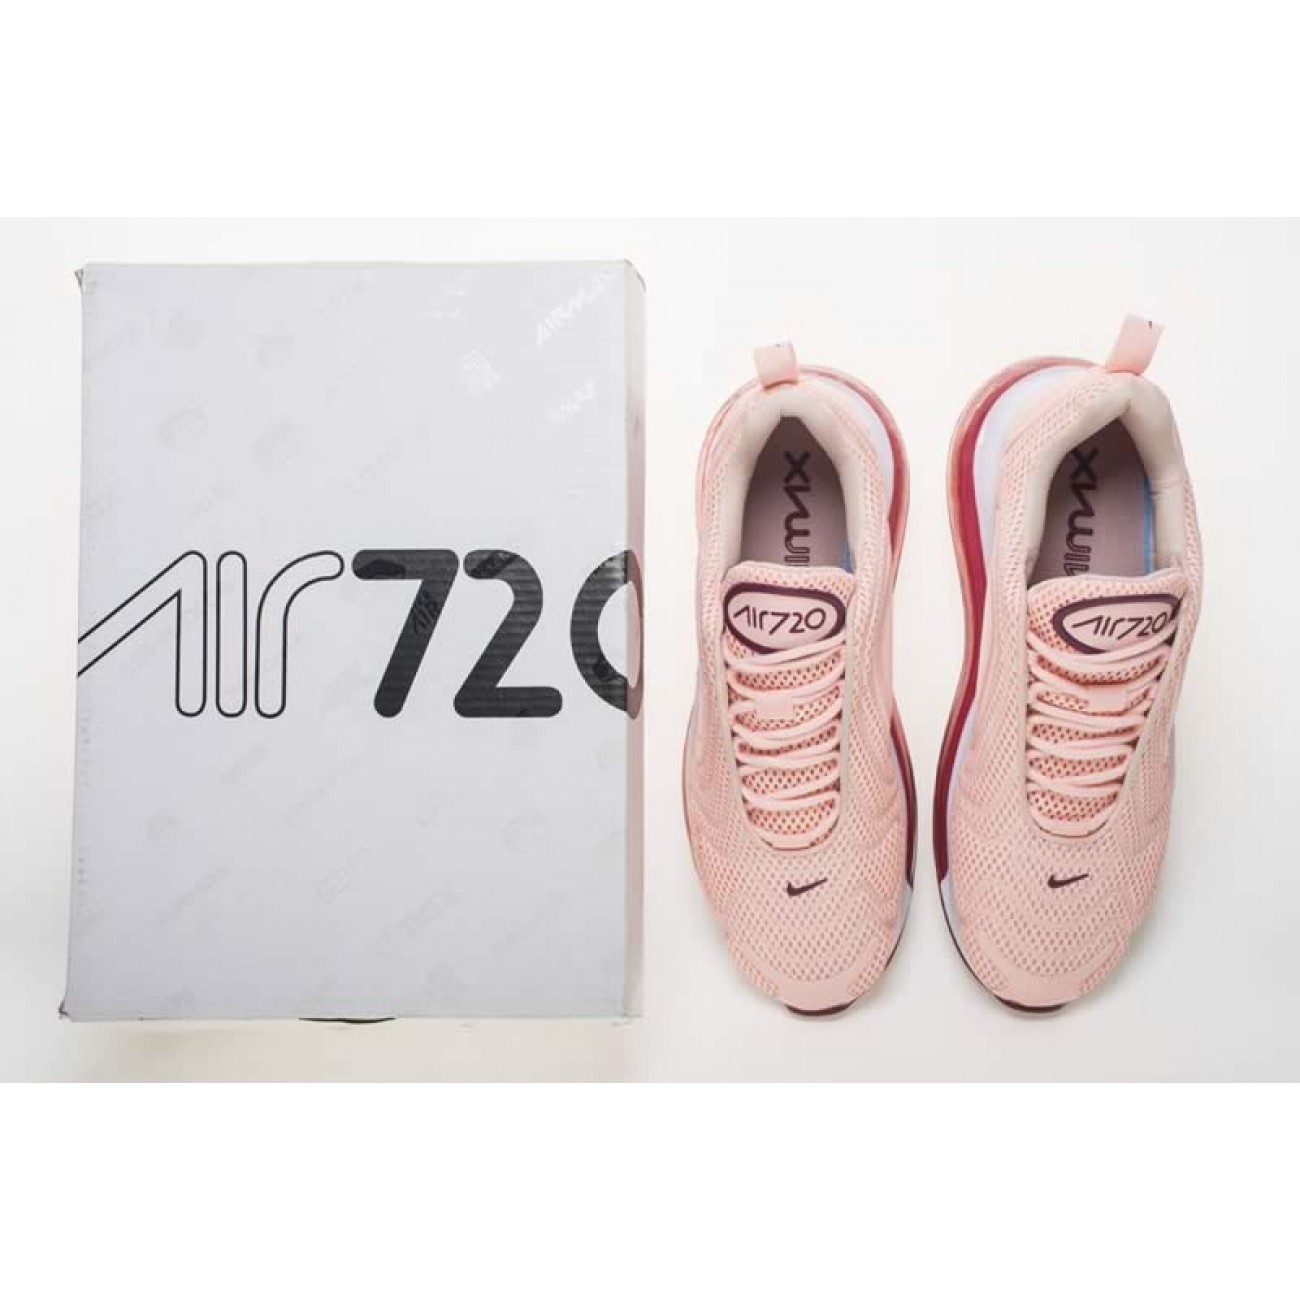 Nike Air Max 720 Womens Pink Sneakers Cheap Sale